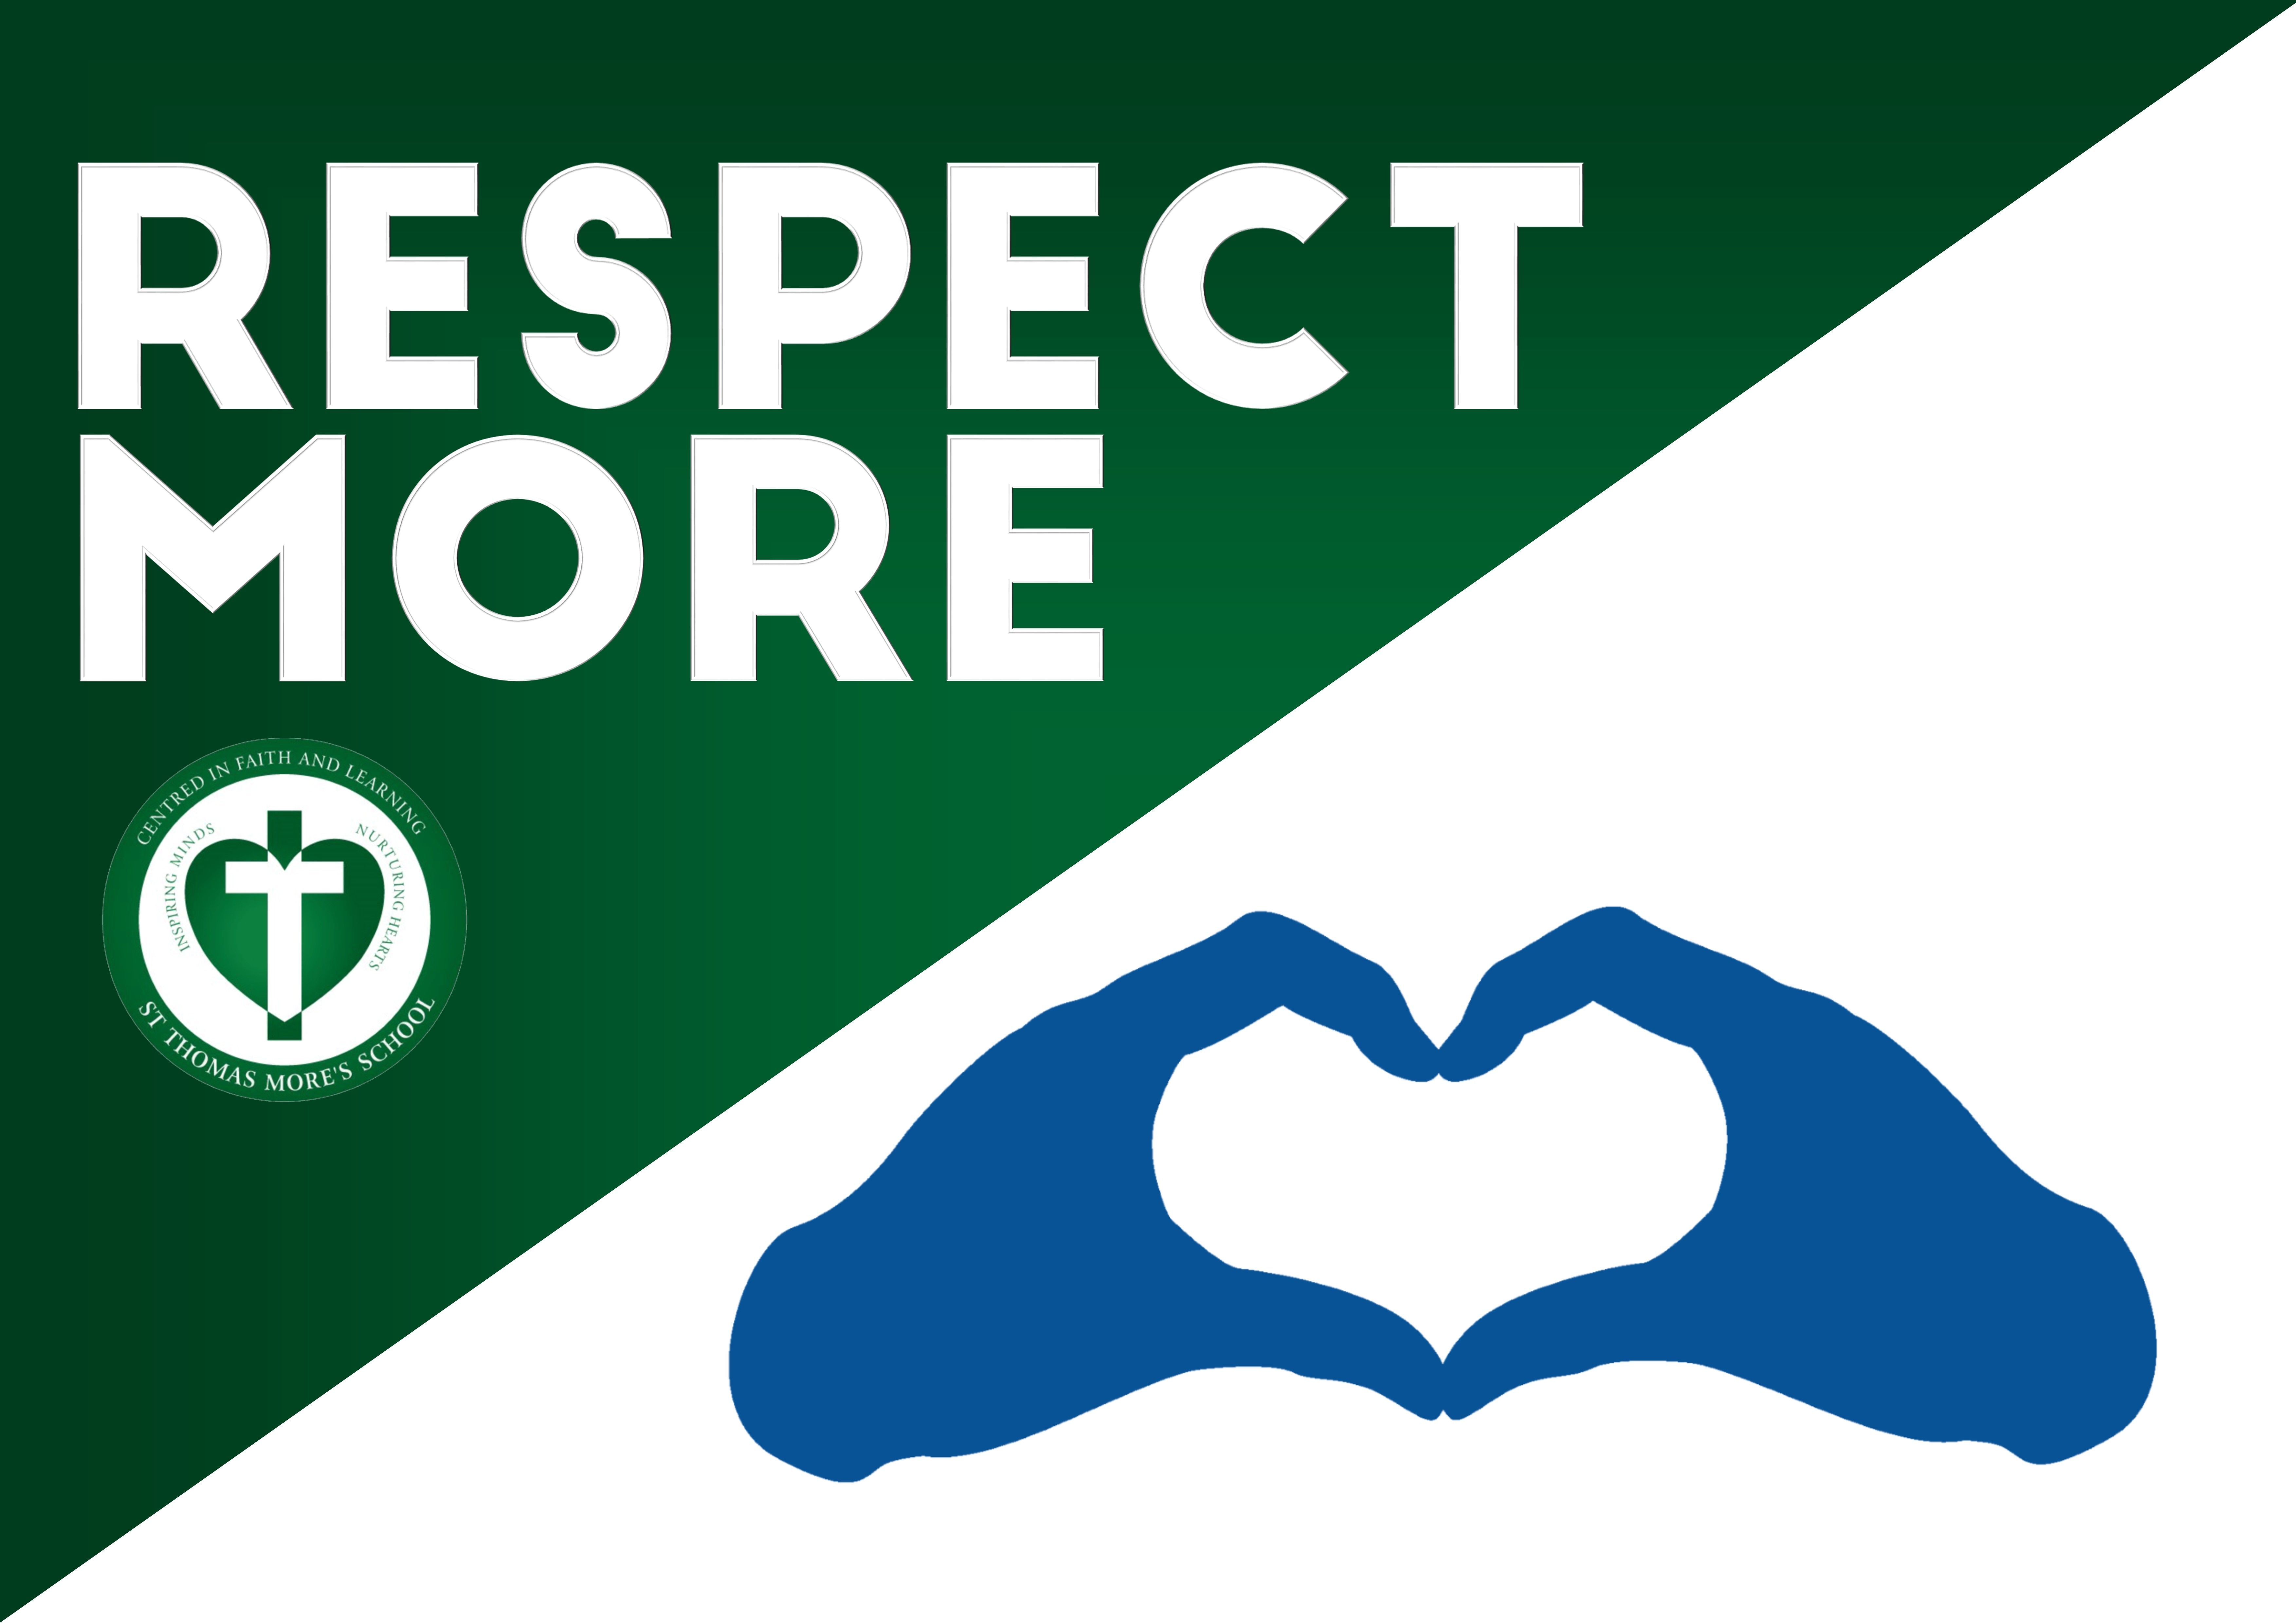 Respect more